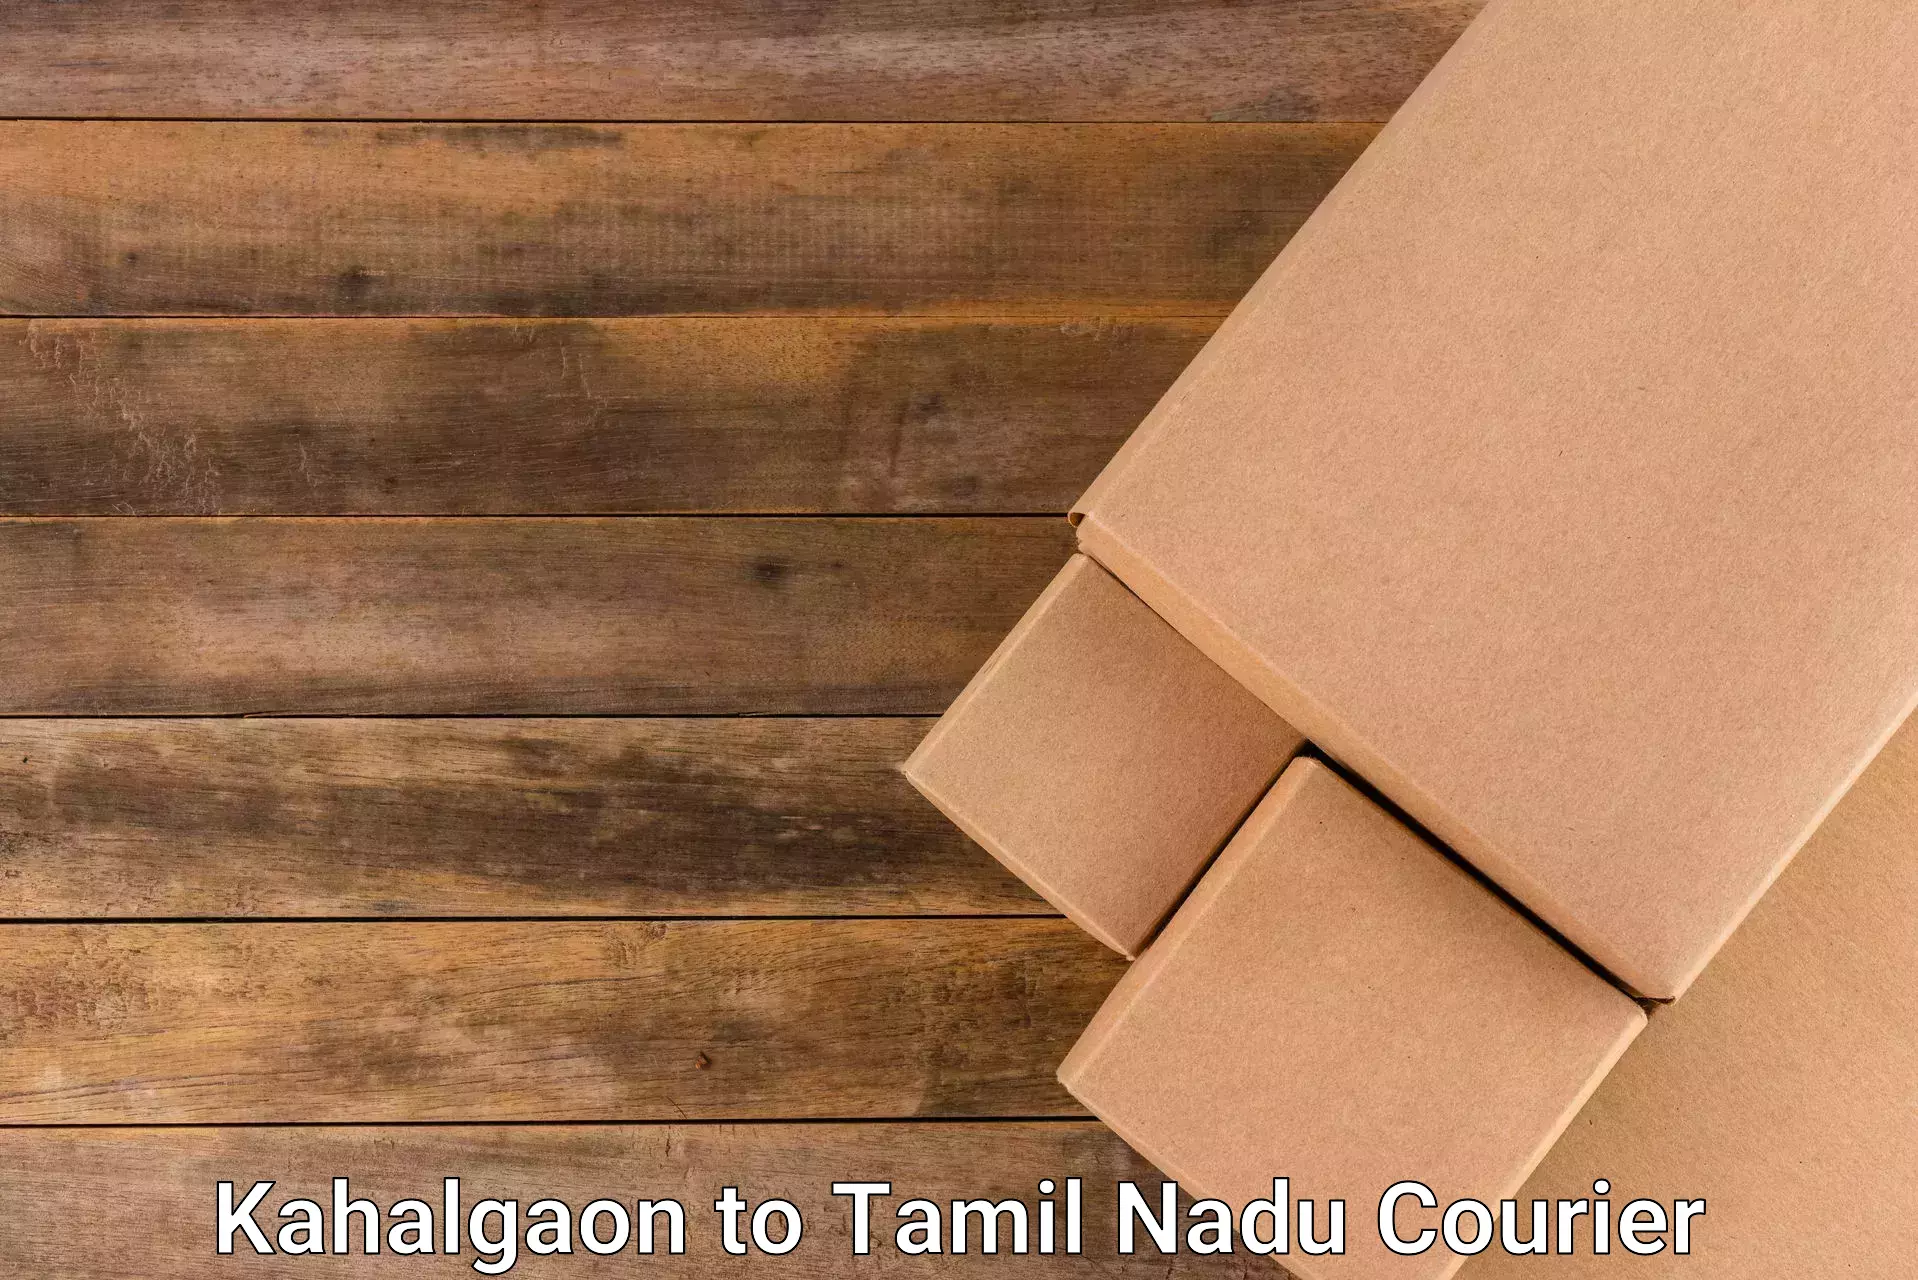 Courier service comparison in Kahalgaon to Tamil Nadu